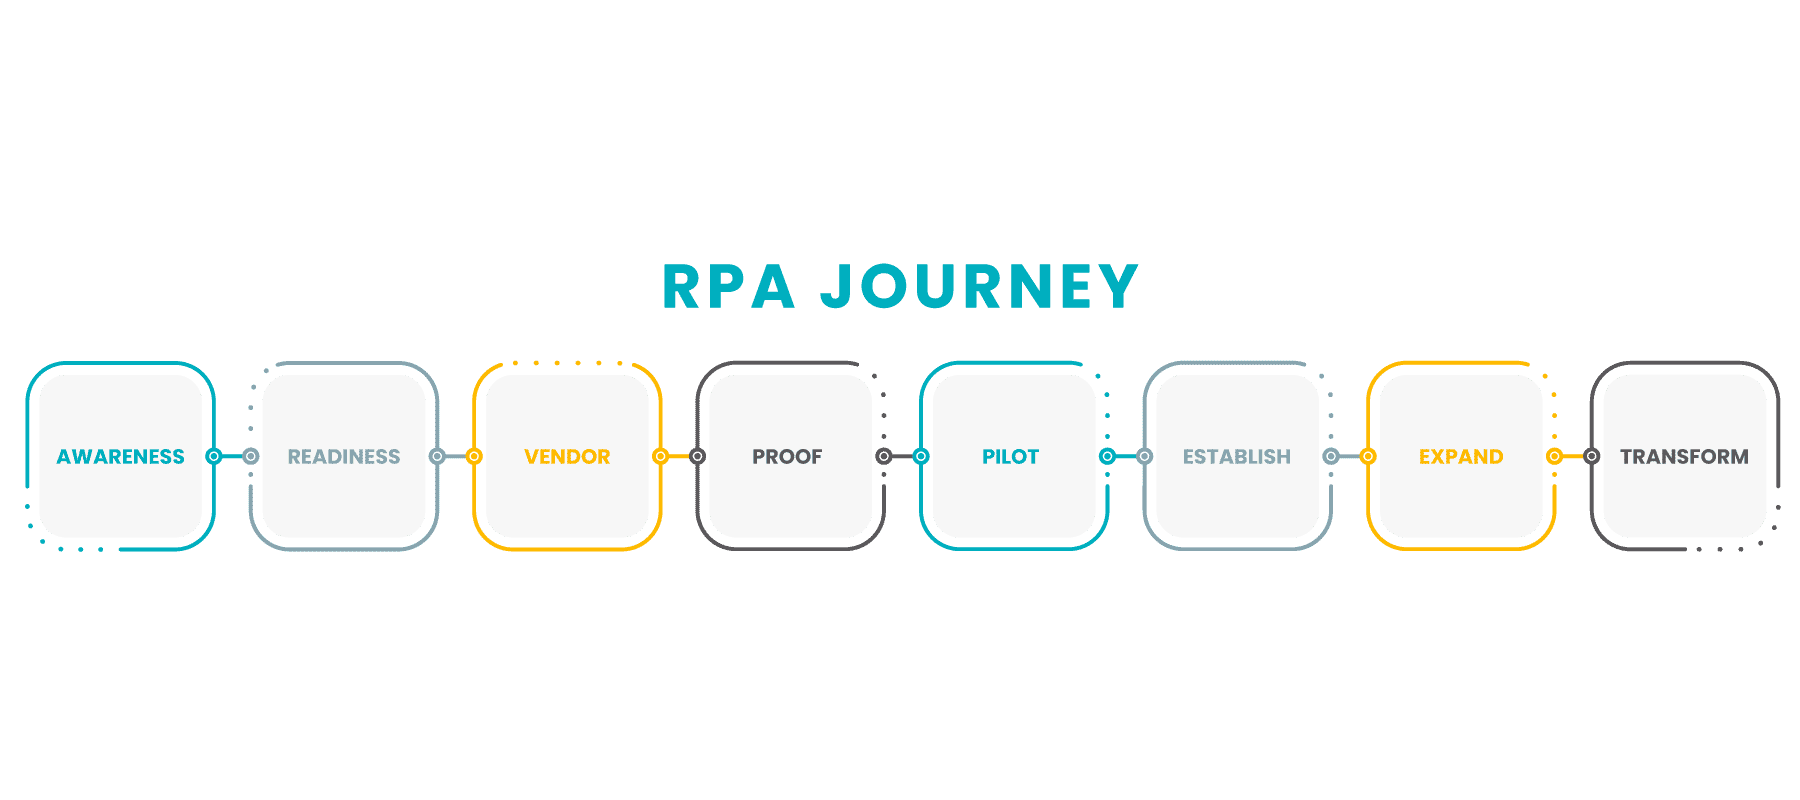 Rpa Journey